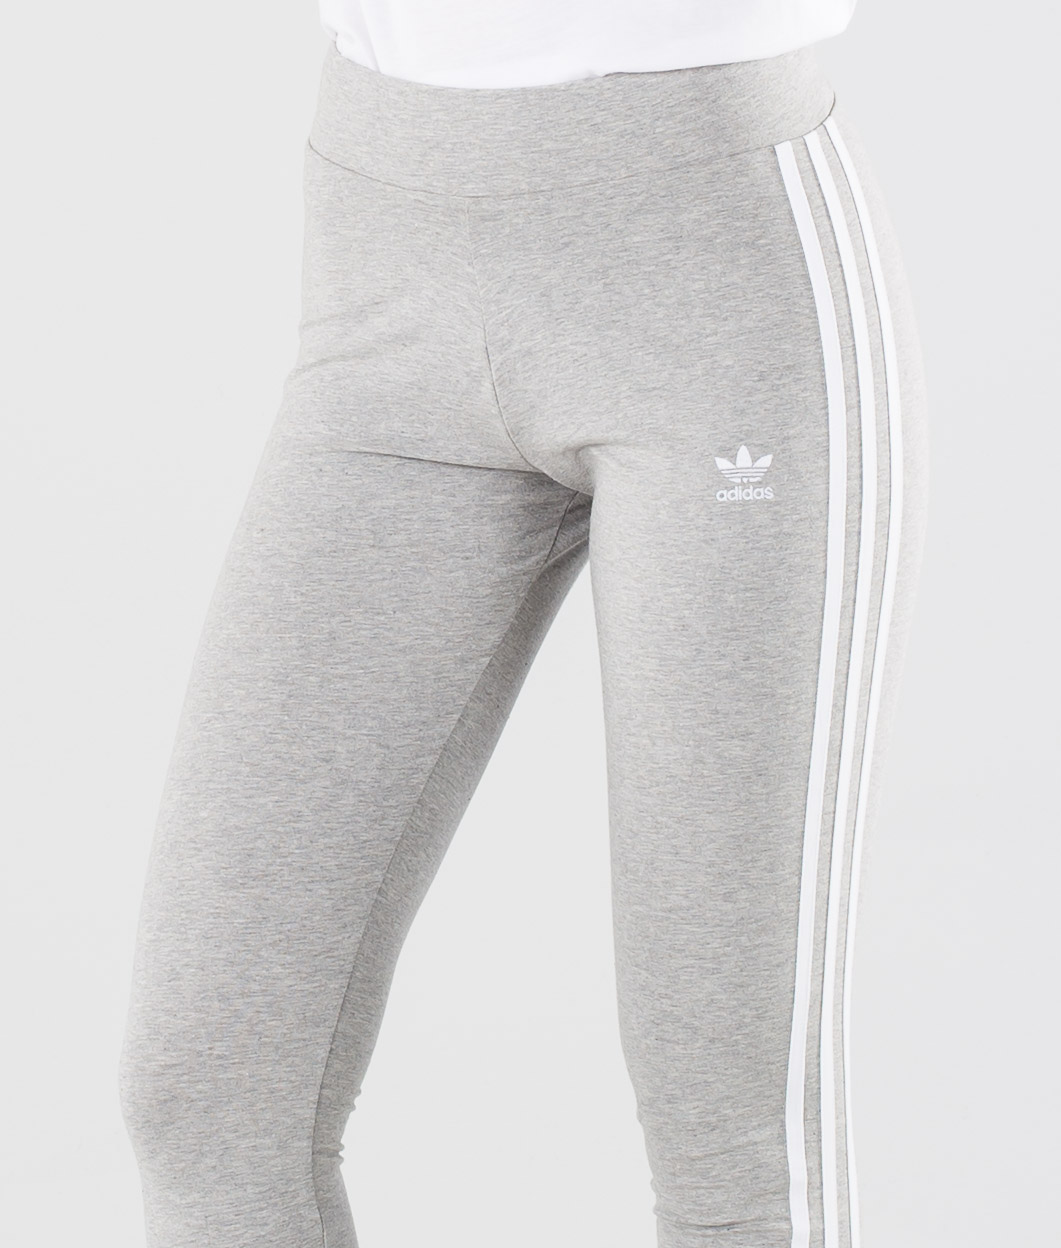 adidas Originals Adidas 3-Stripes Tights Medium Grey Heather in Grau Damen Bekleidung Strumpfware 